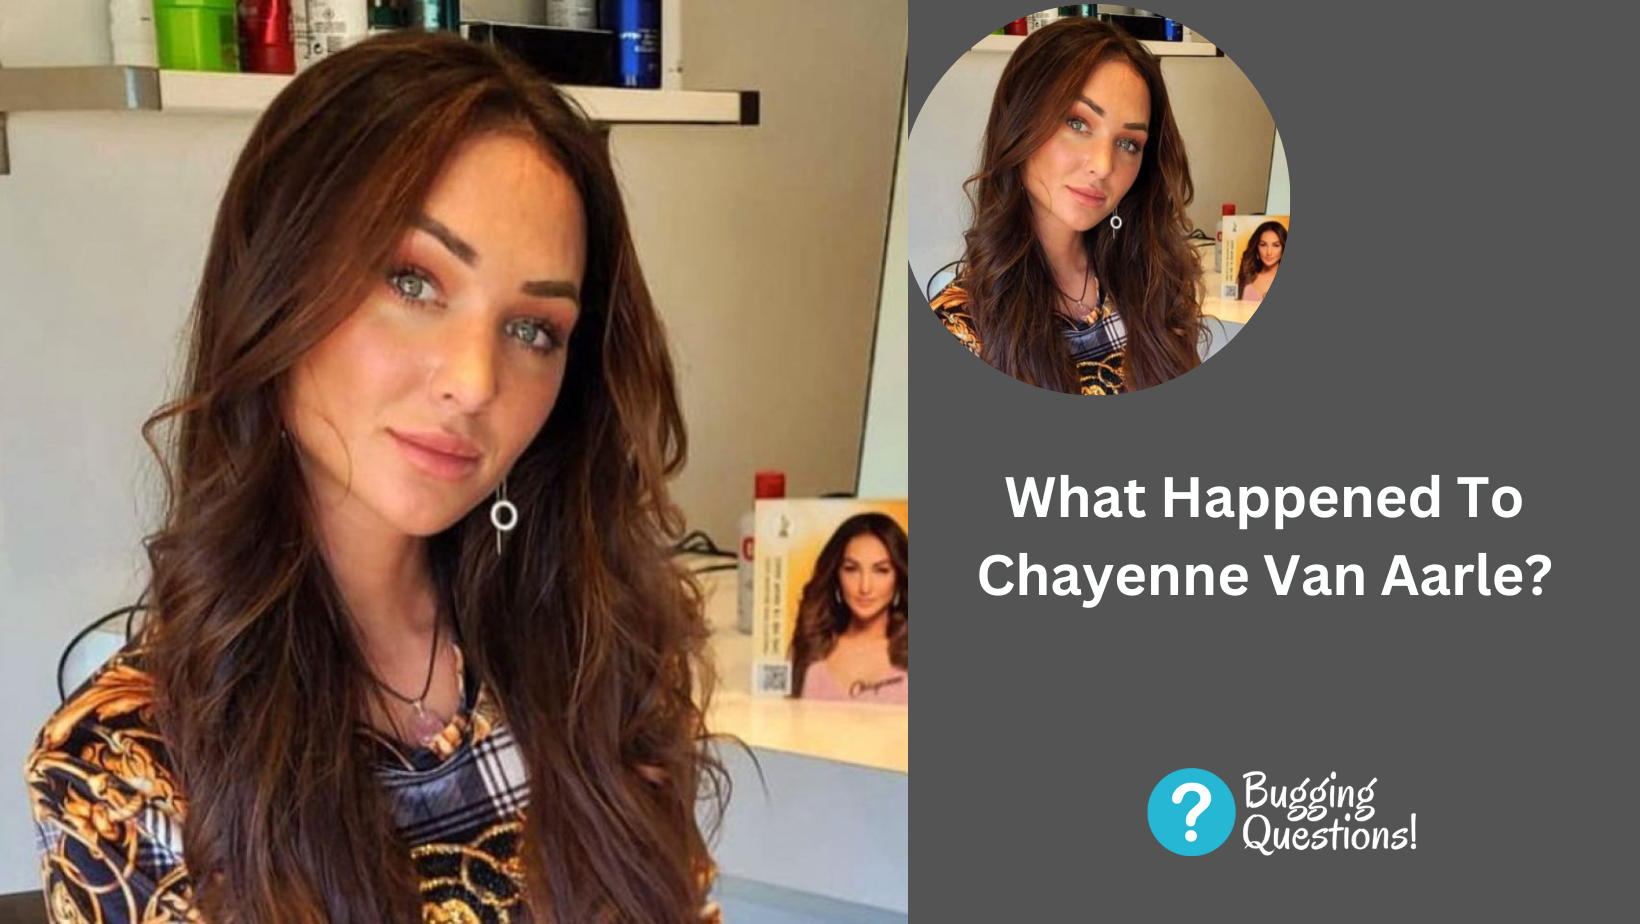 What Happened To Chayenne Van Aarle?